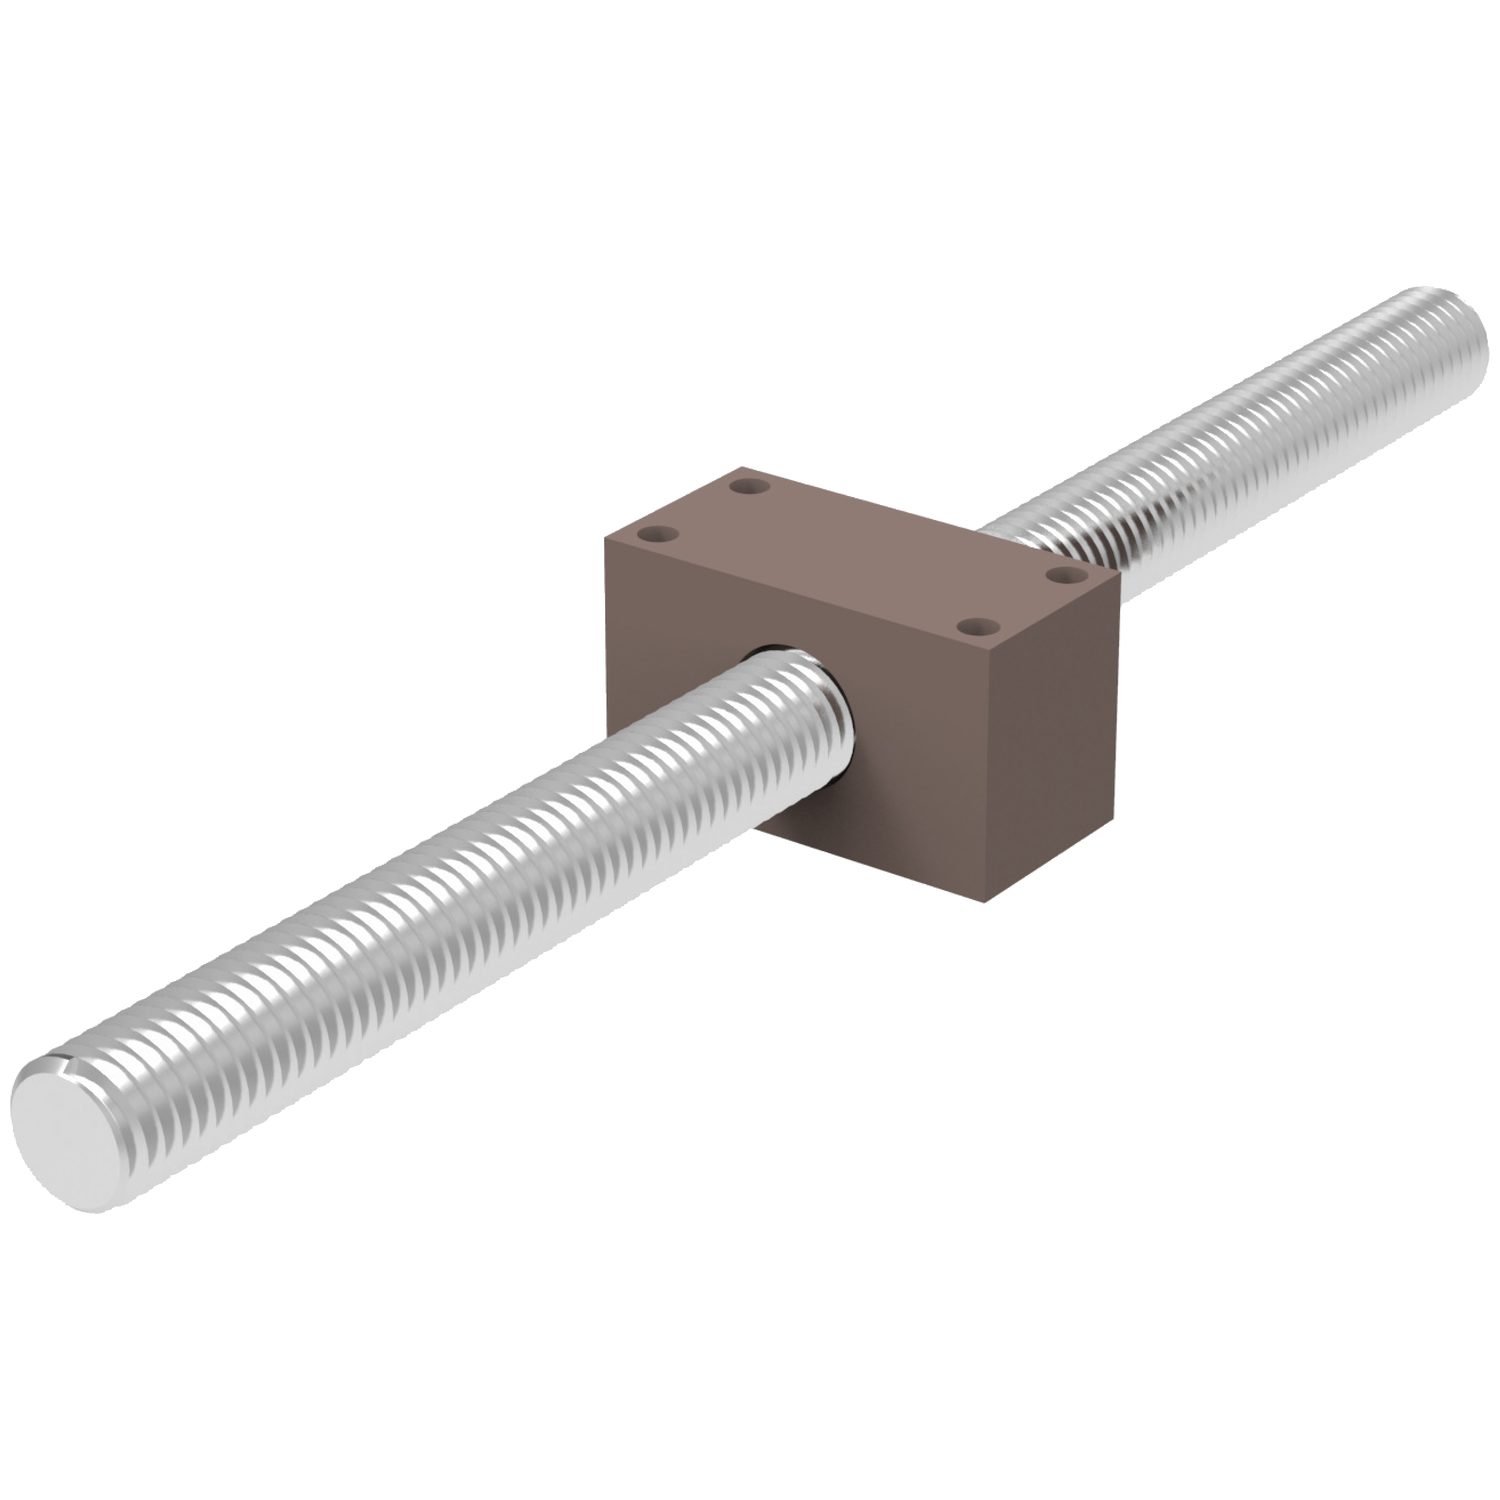 Rectangular Nut Lead Screws High precision lead screws with square acetal nuts.